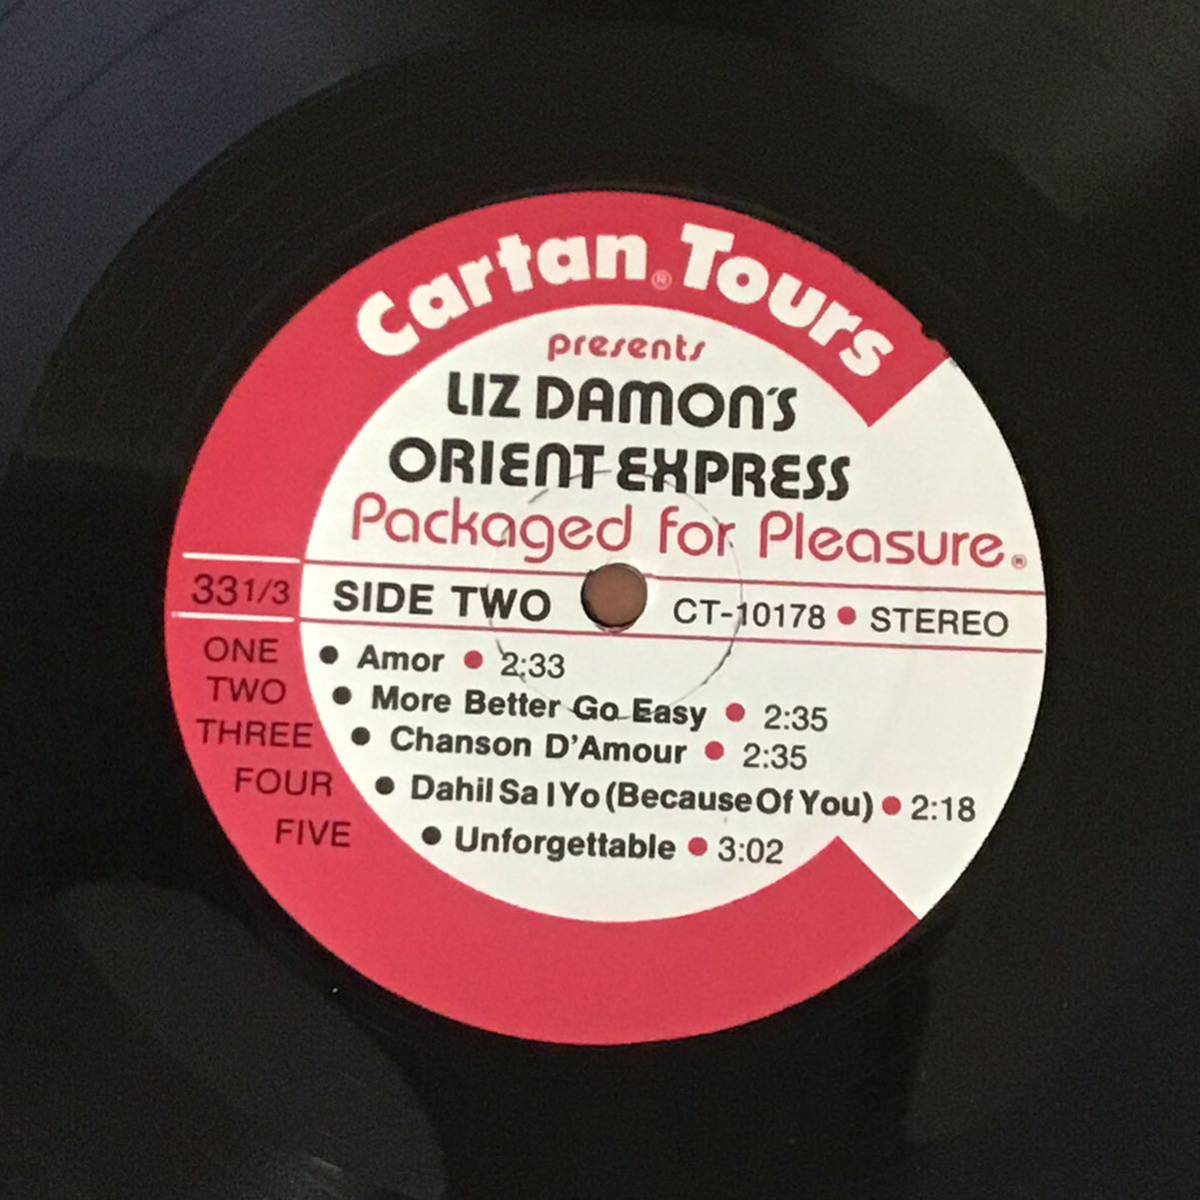 US盤 見開き /LIZ DAMON'S ORIENT EXPRESS/CARTAN TOURS / Cartan Tours CT-10178_画像4